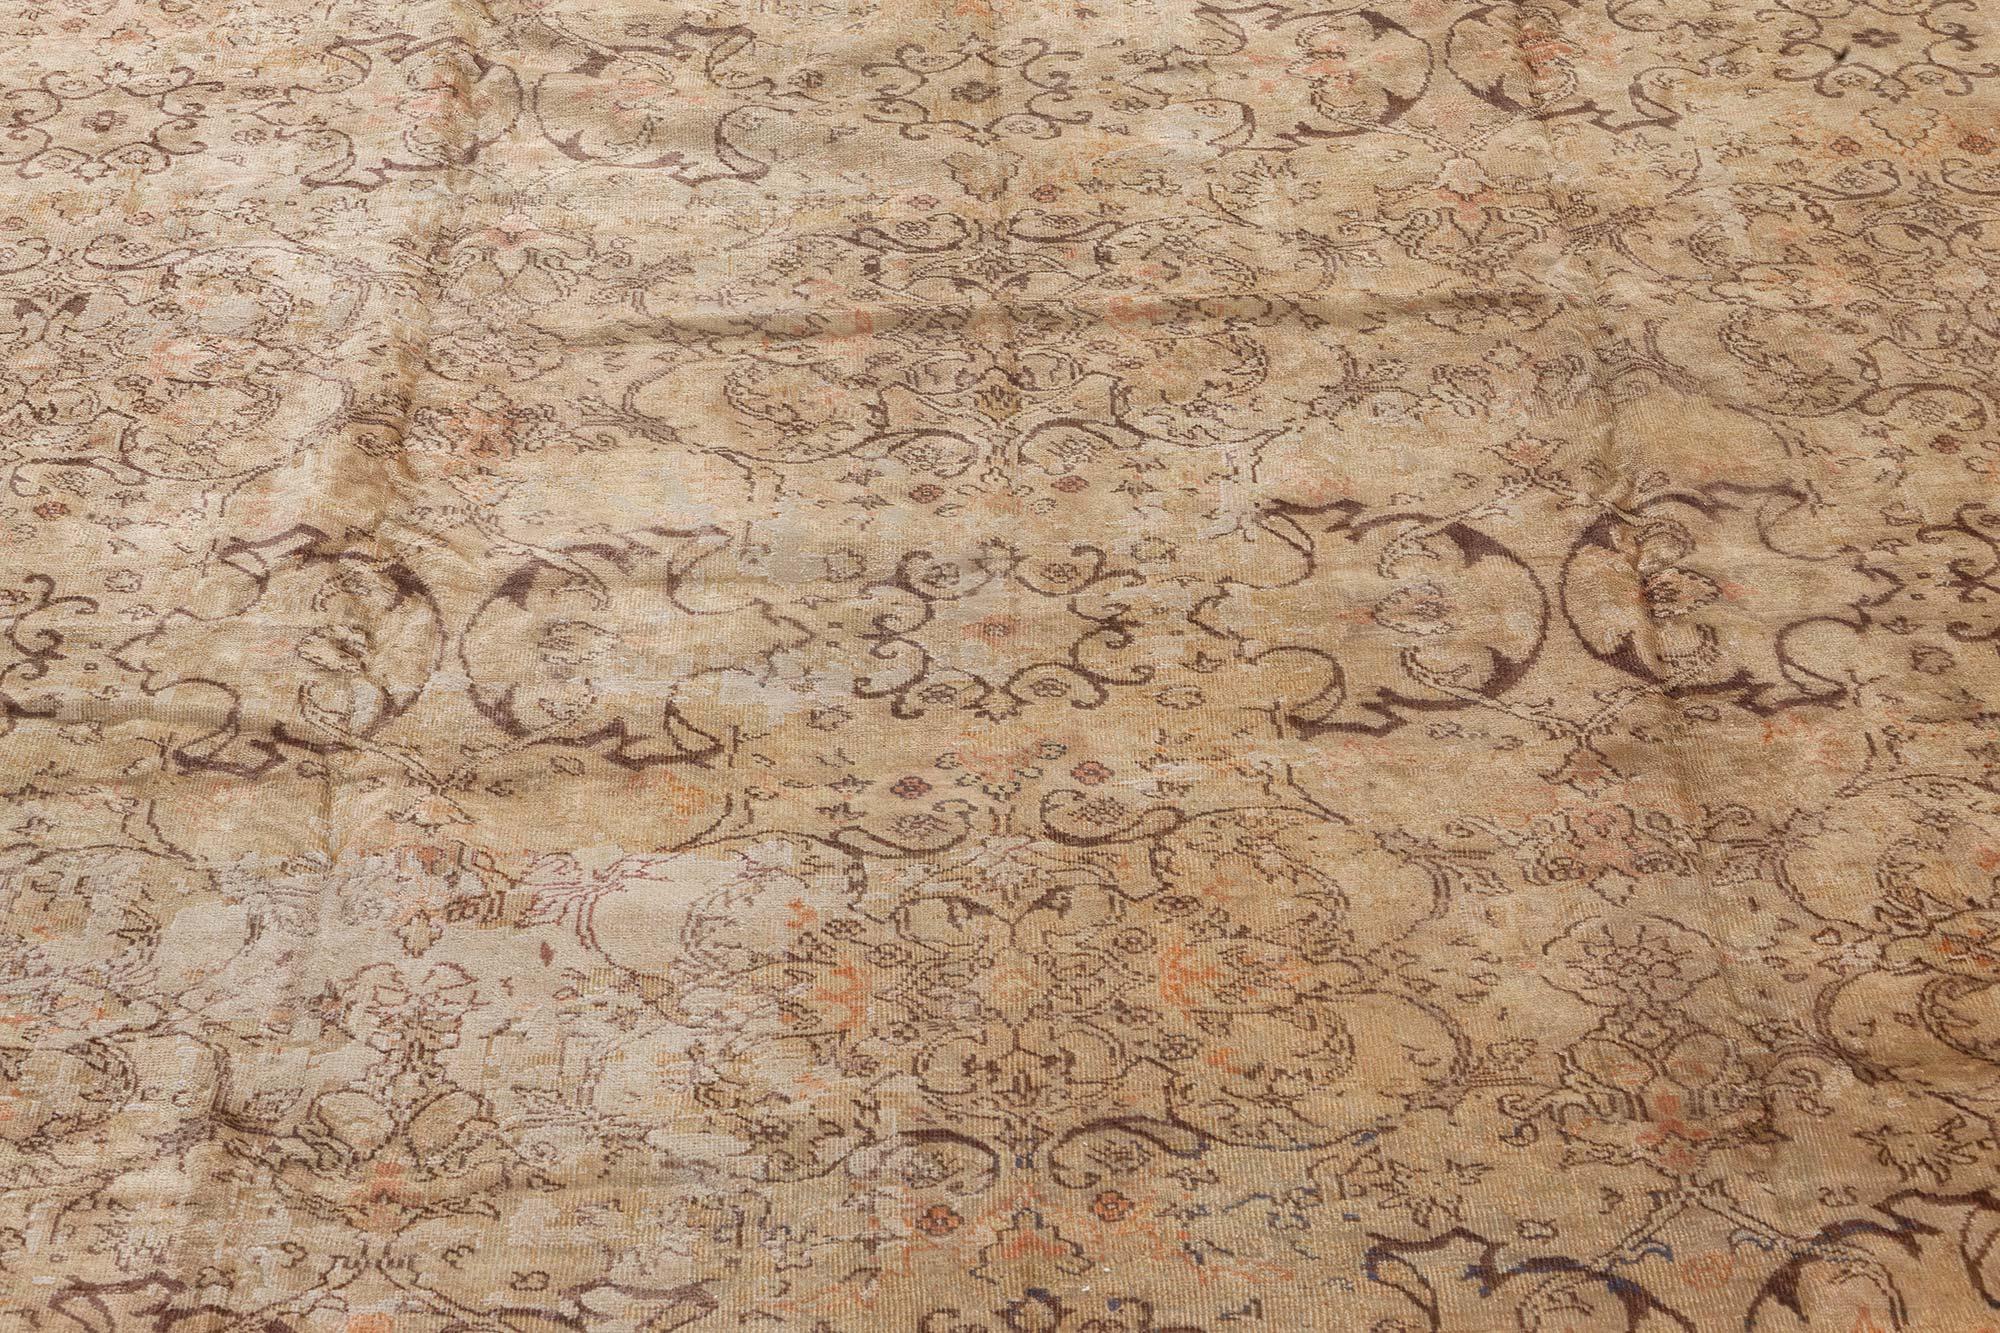 Early 20th century Turkish Sivas handmade wool rug
Size: 11'7